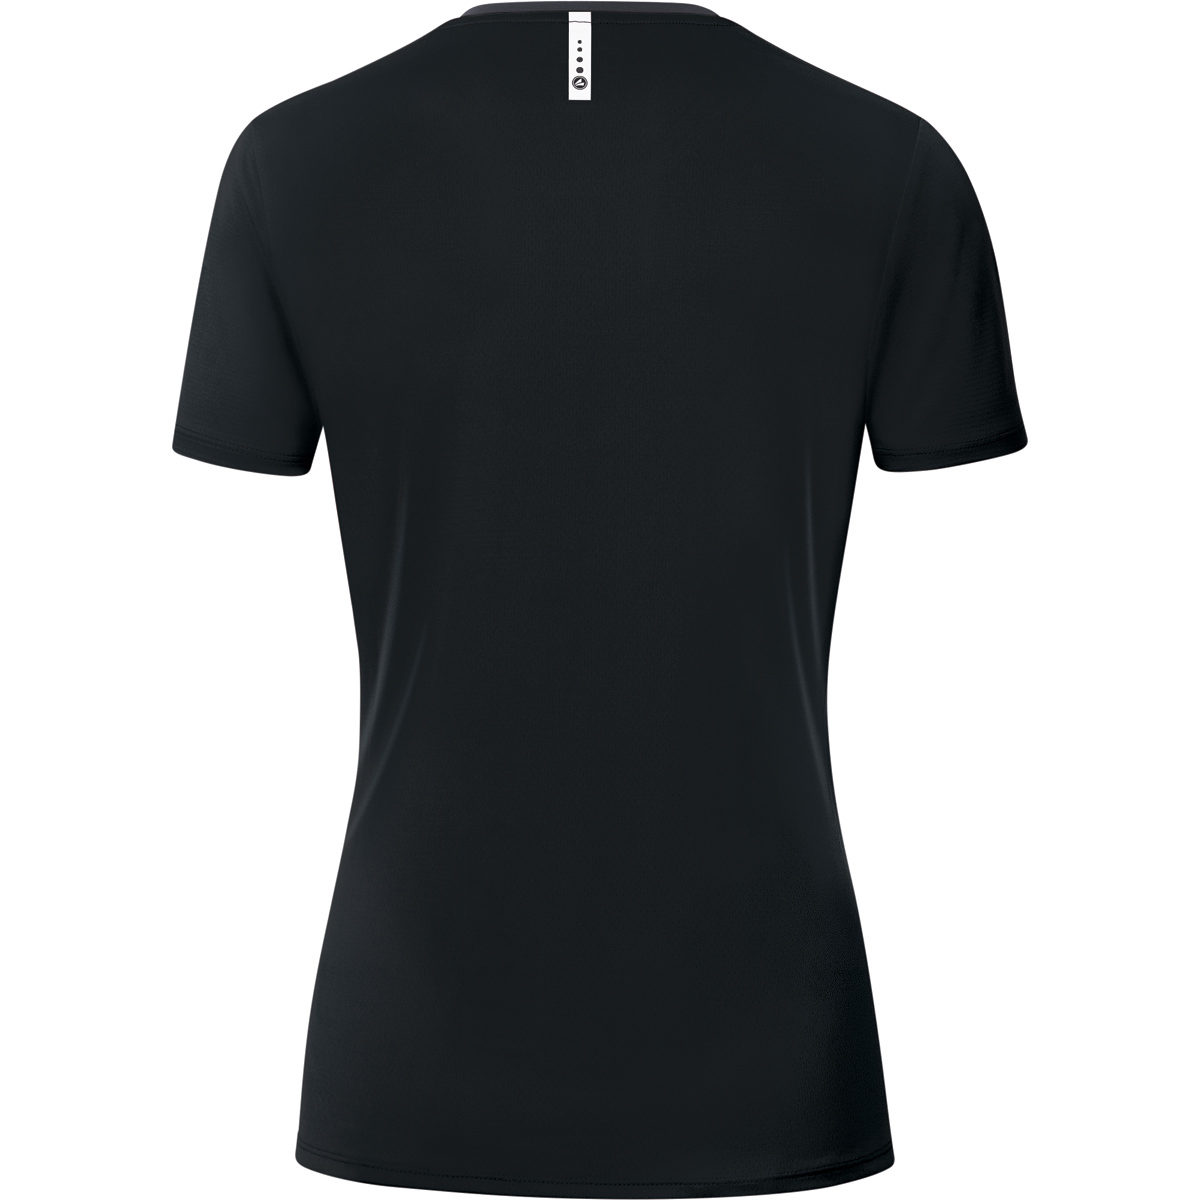 JAKO T-Shirt Champ 2.0 Damen, schwarz/anthrazit, 6120 36, Gr